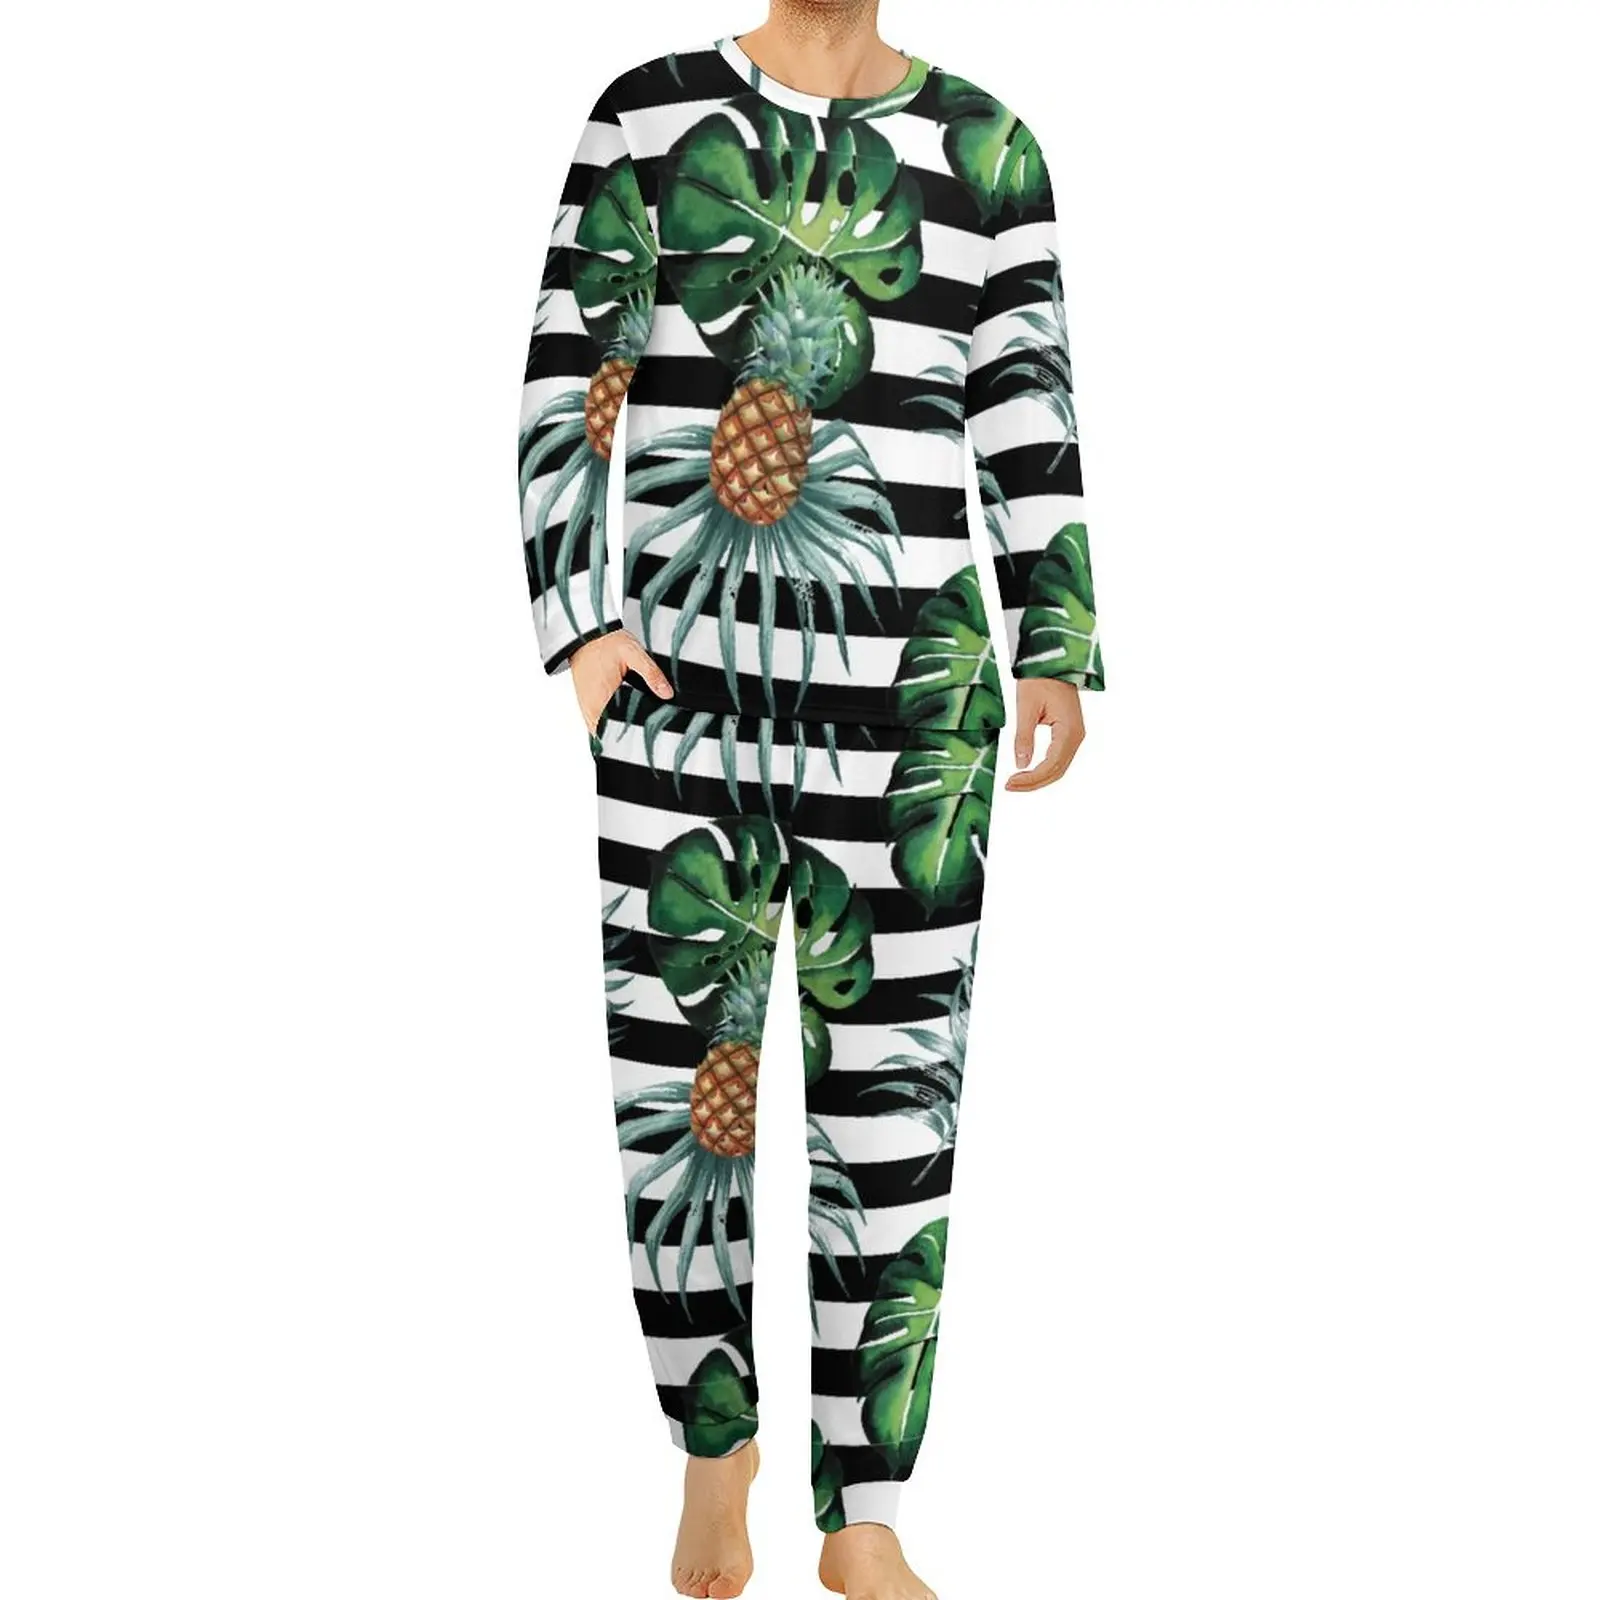 

Tropical Pineapple Pajamas Daily Black Stripes Print Kawaii Pajama Sets Long Sleeve Casual Design Nightwear Big Size 4XL 5XL